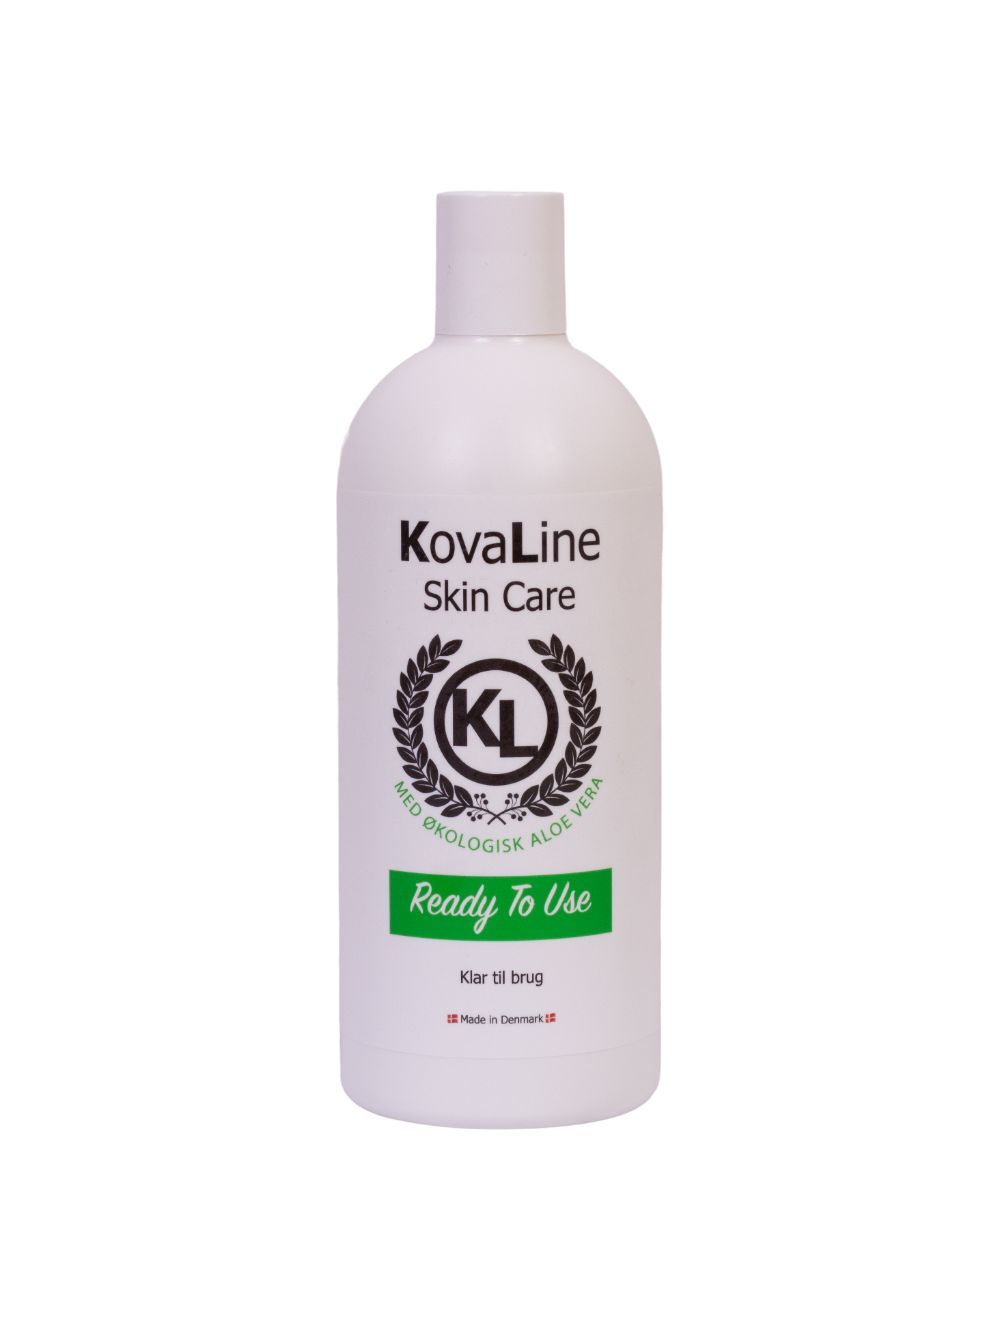 KovaLine - Ready to use - Aloe vera - 500ml - (571326900024), Kovaline